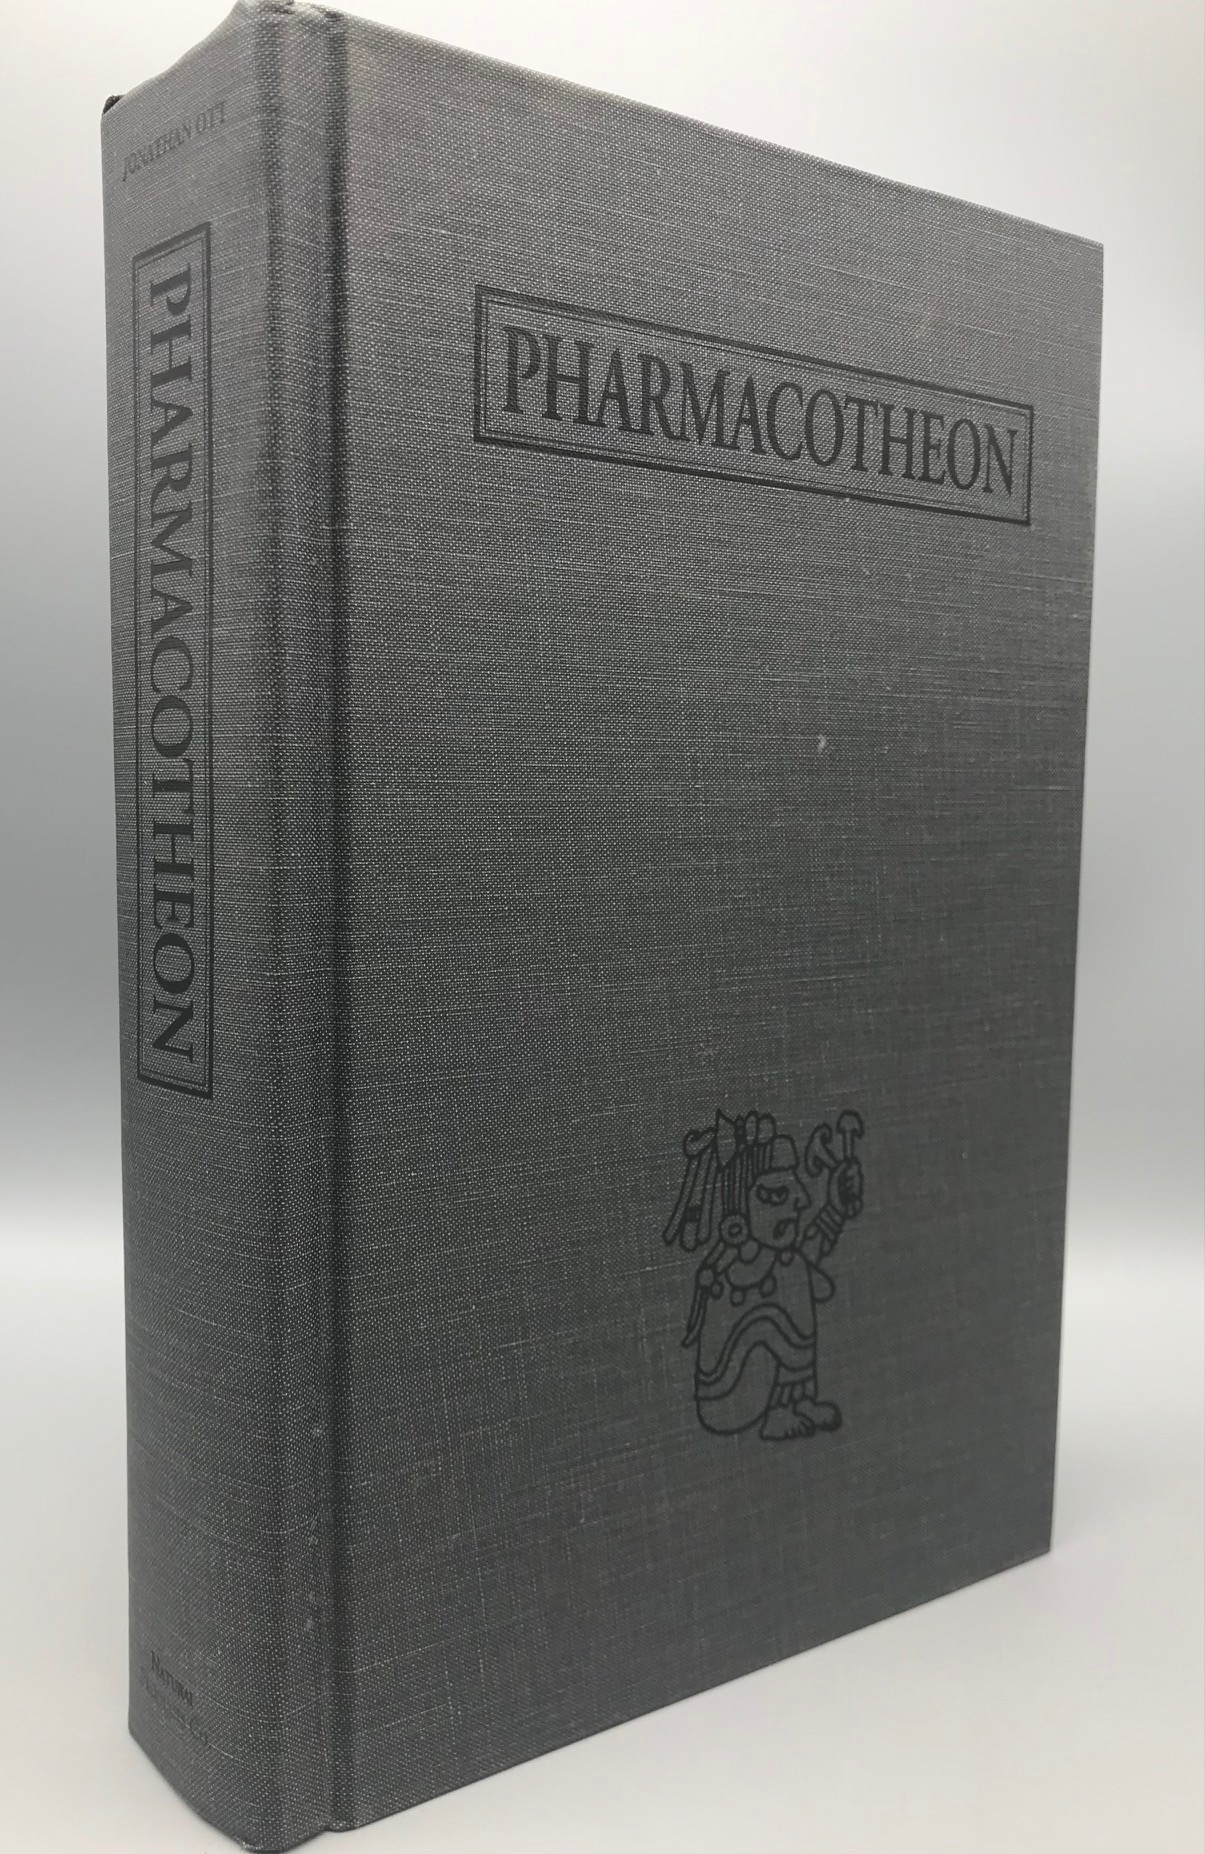 PHARMACOTHEON, by Jonathan Ott - 1996 [Signed ltd. 2nd ed.]